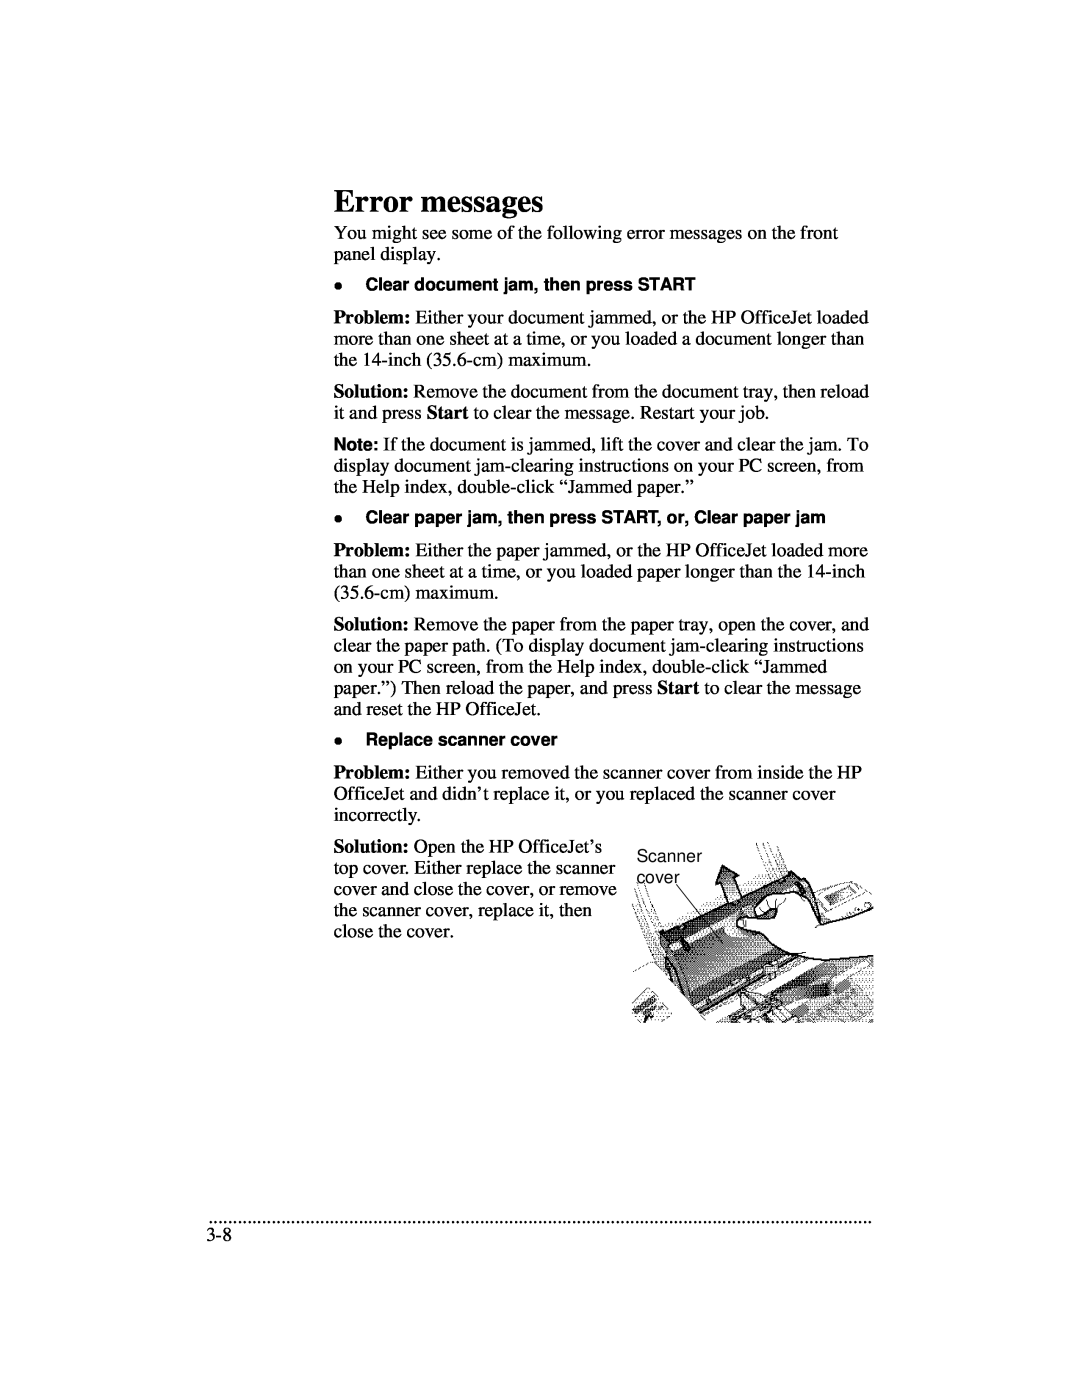 HP 700 manual Error messages 